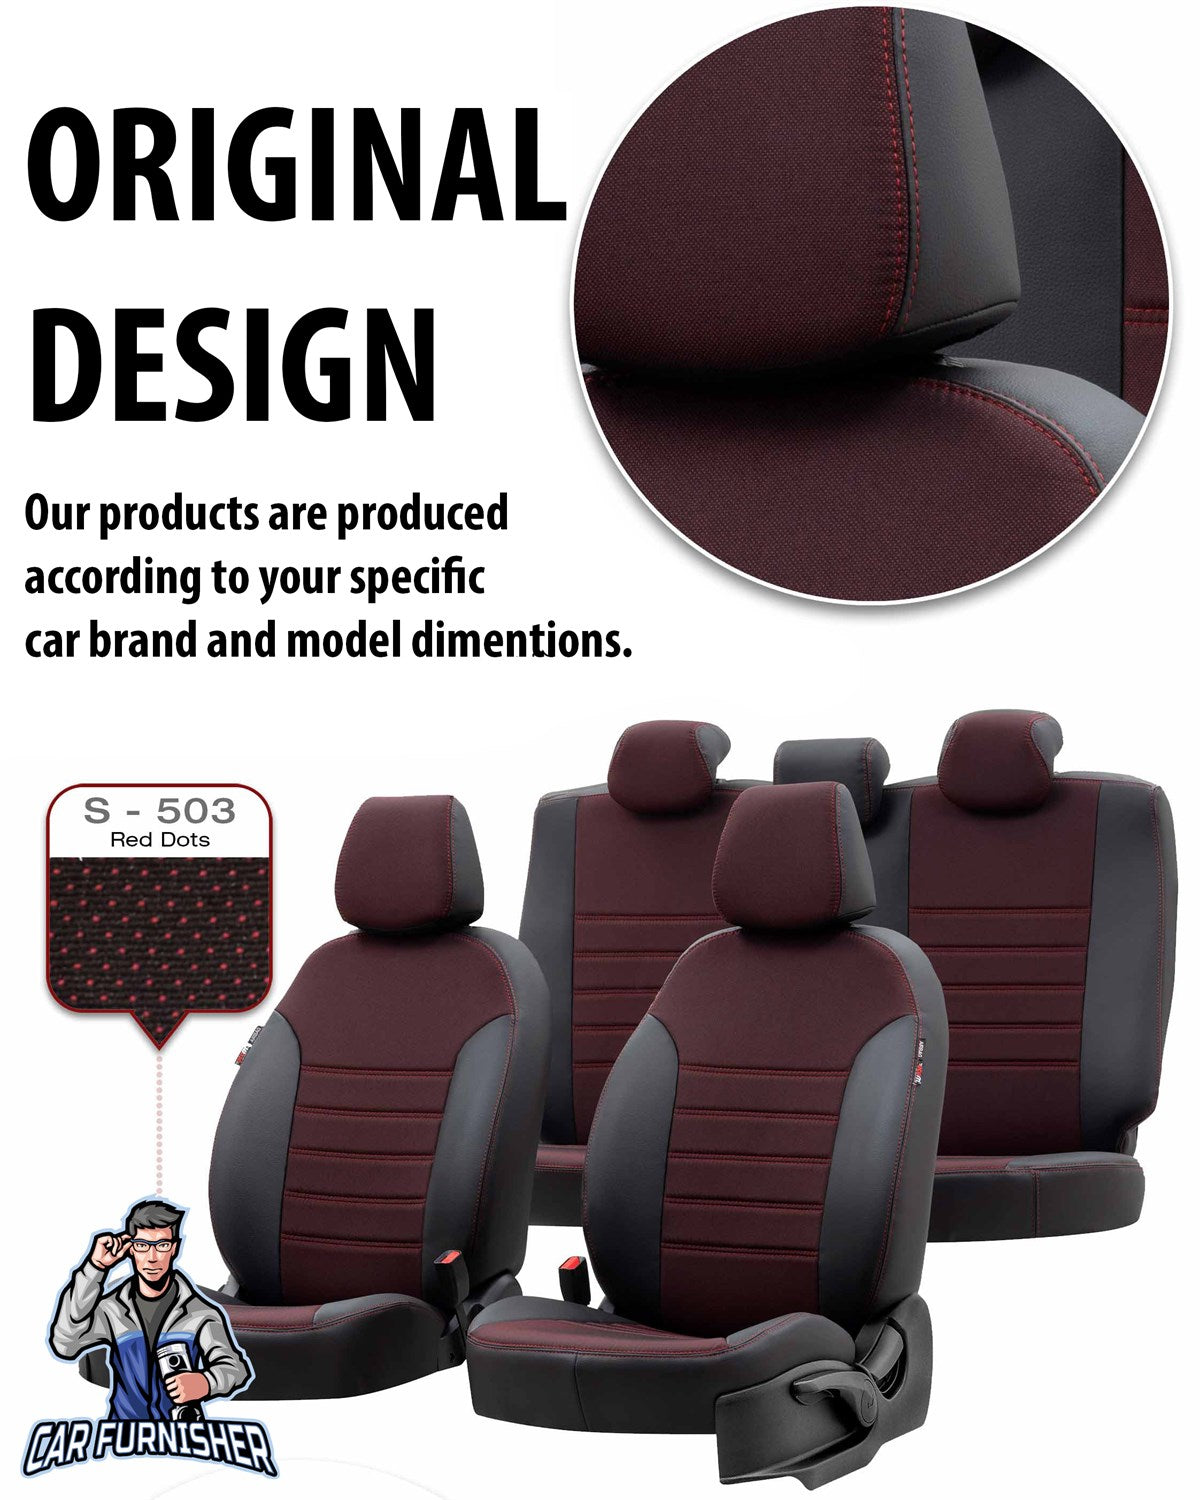 Alfa Romeo Giulietta Seat Cover Paris Leather & Jacquard Design Gray Leather & Jacquard Fabric